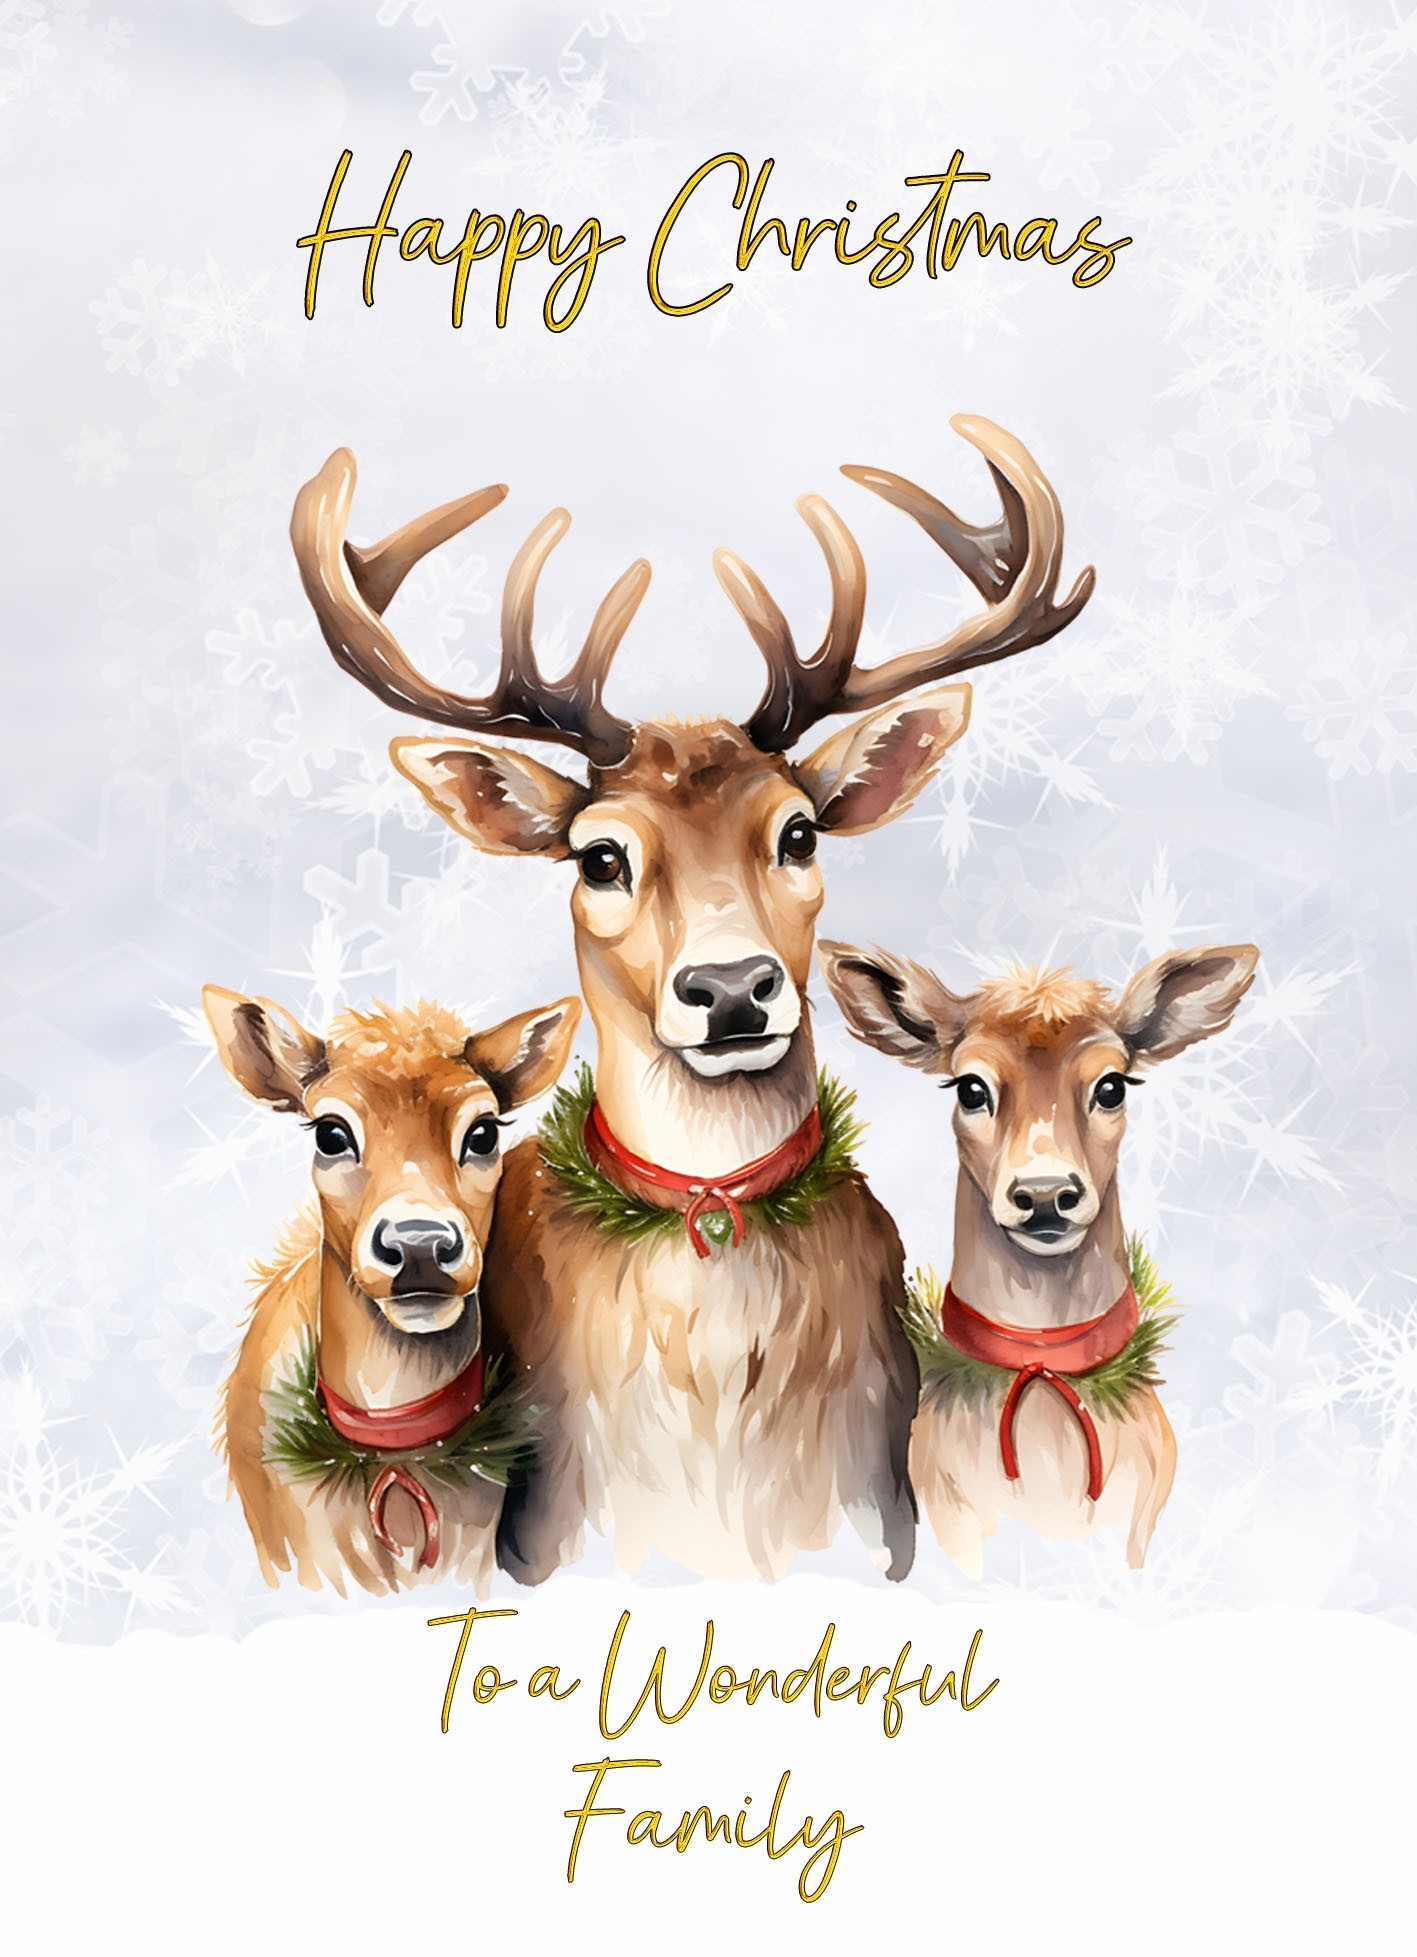 Christmas Card For Family (Reindeer)